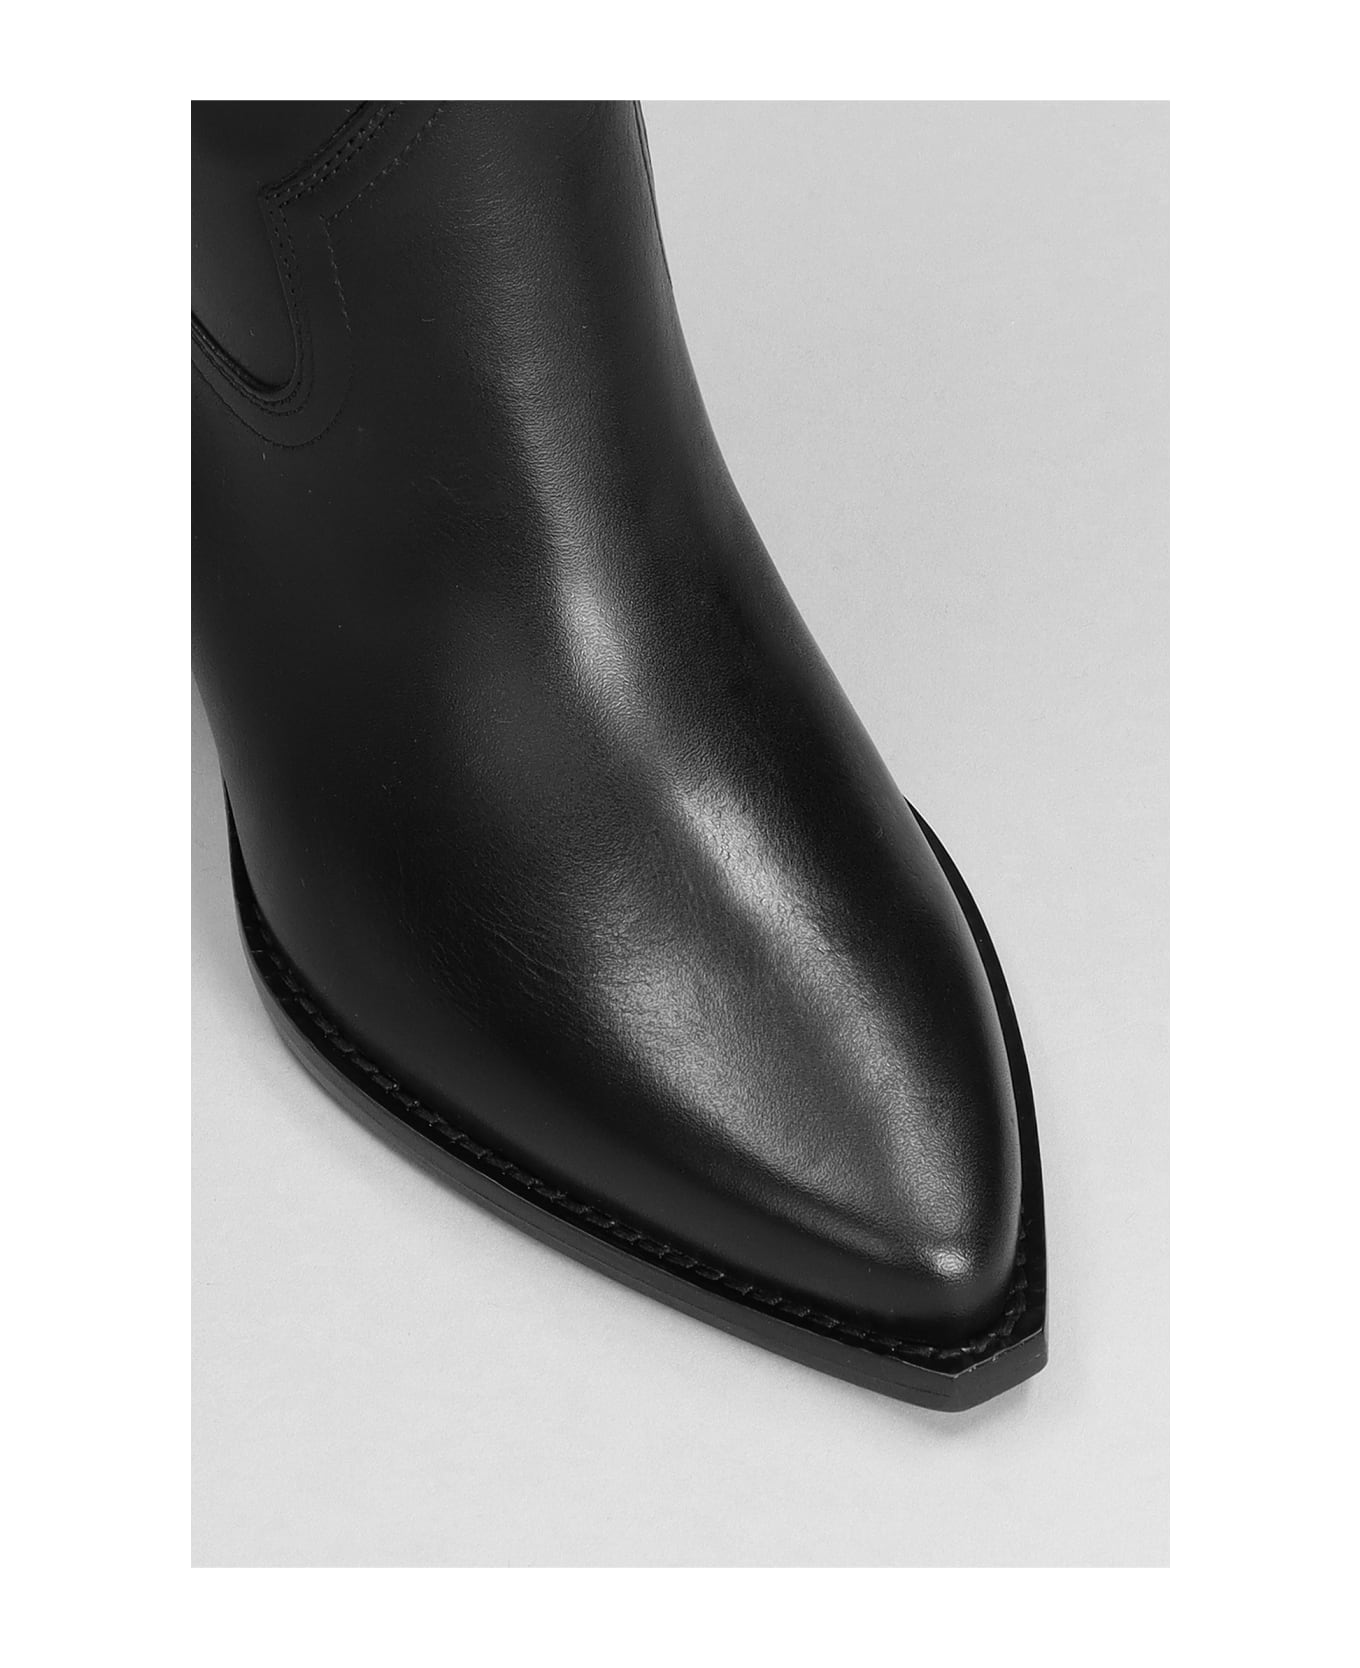 Isabel Marant 'dahope' Leather Cowboy Boots - Black